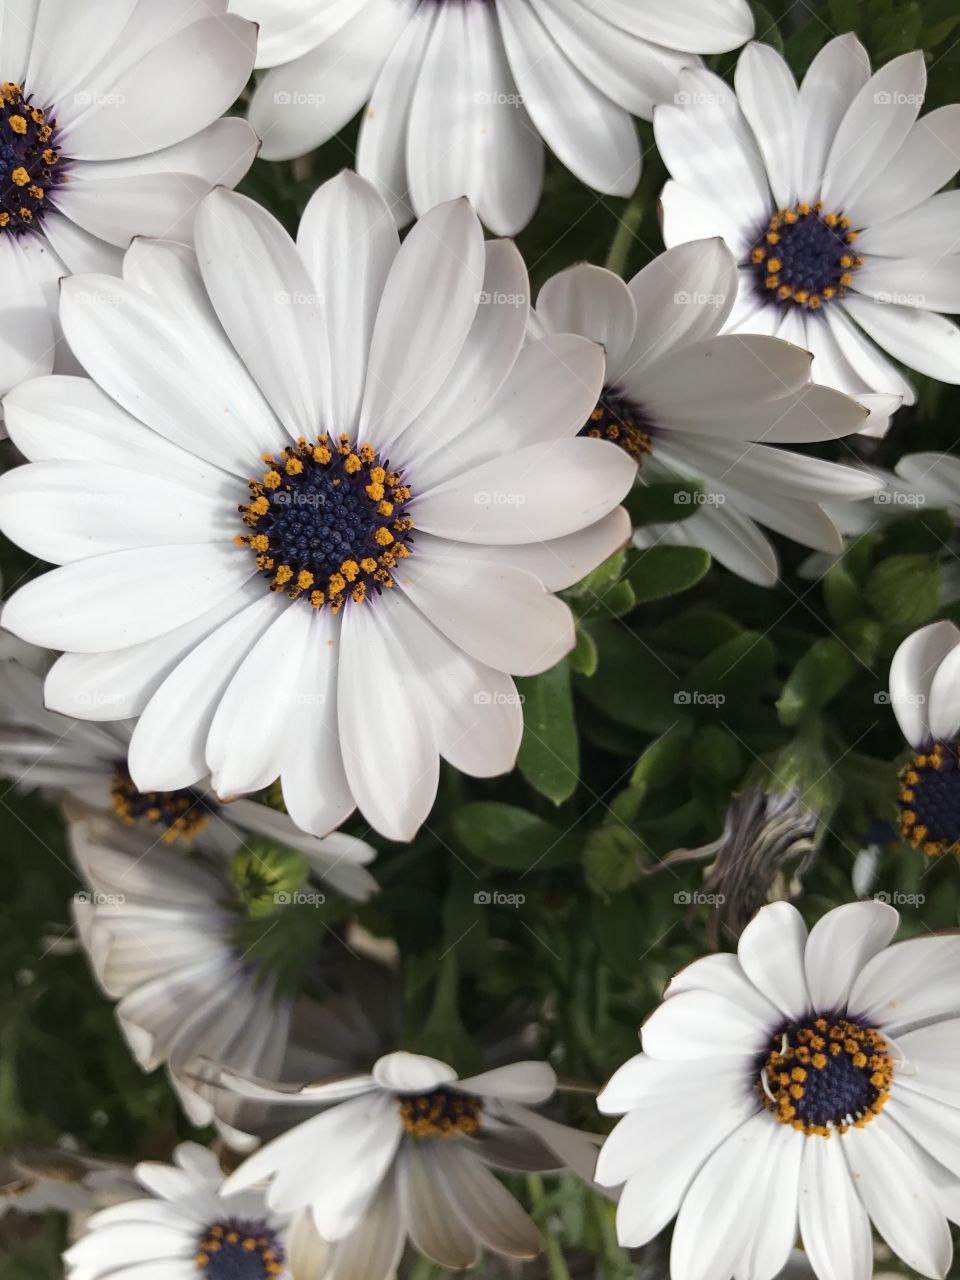 White daisy flowers in bloom